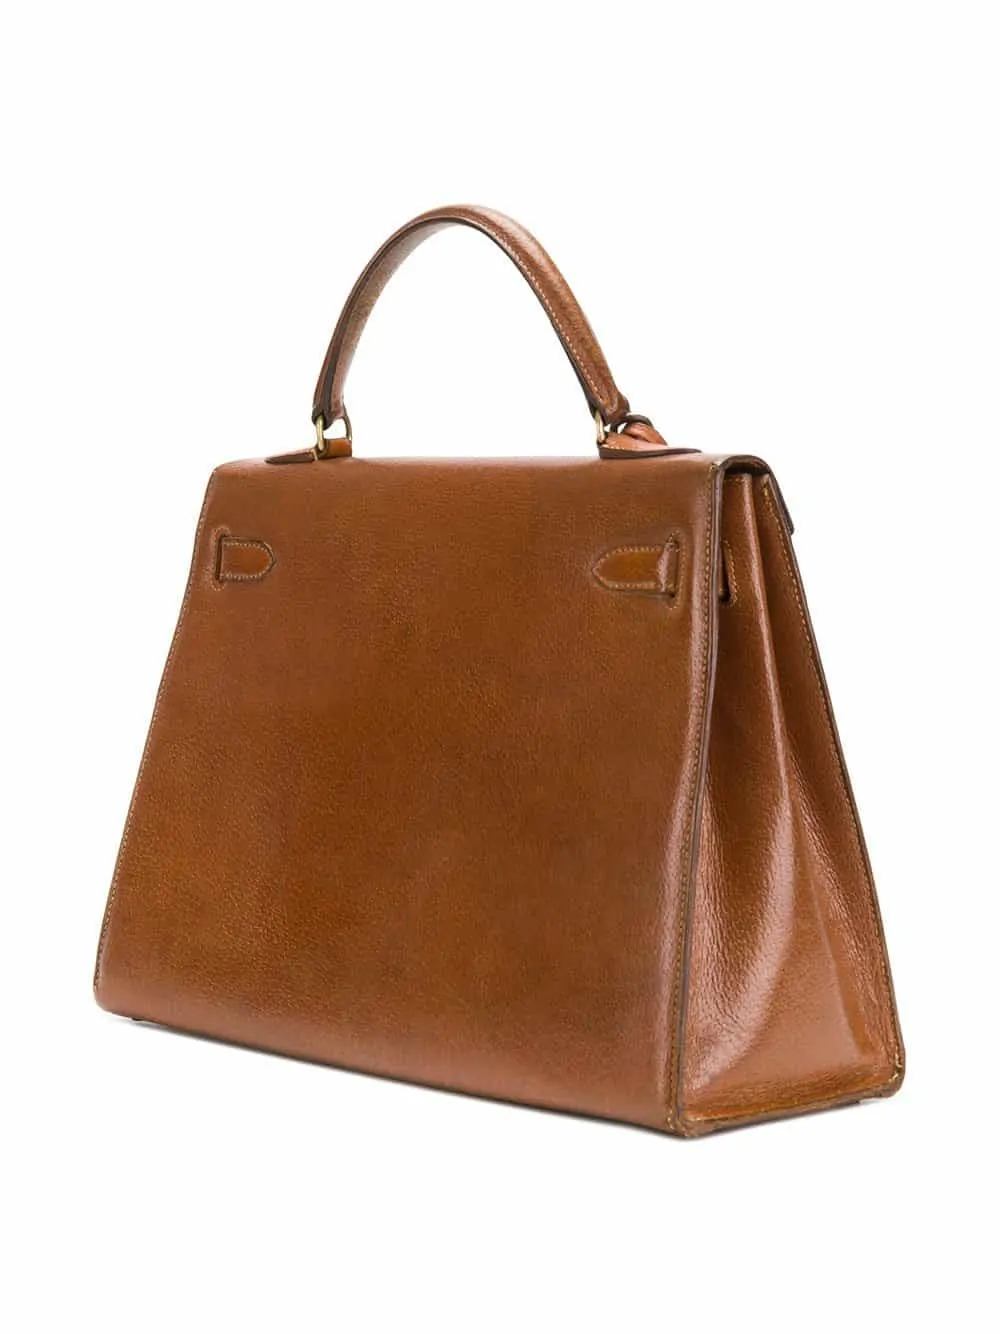 Kelly 32 Vintage bag in orange leather